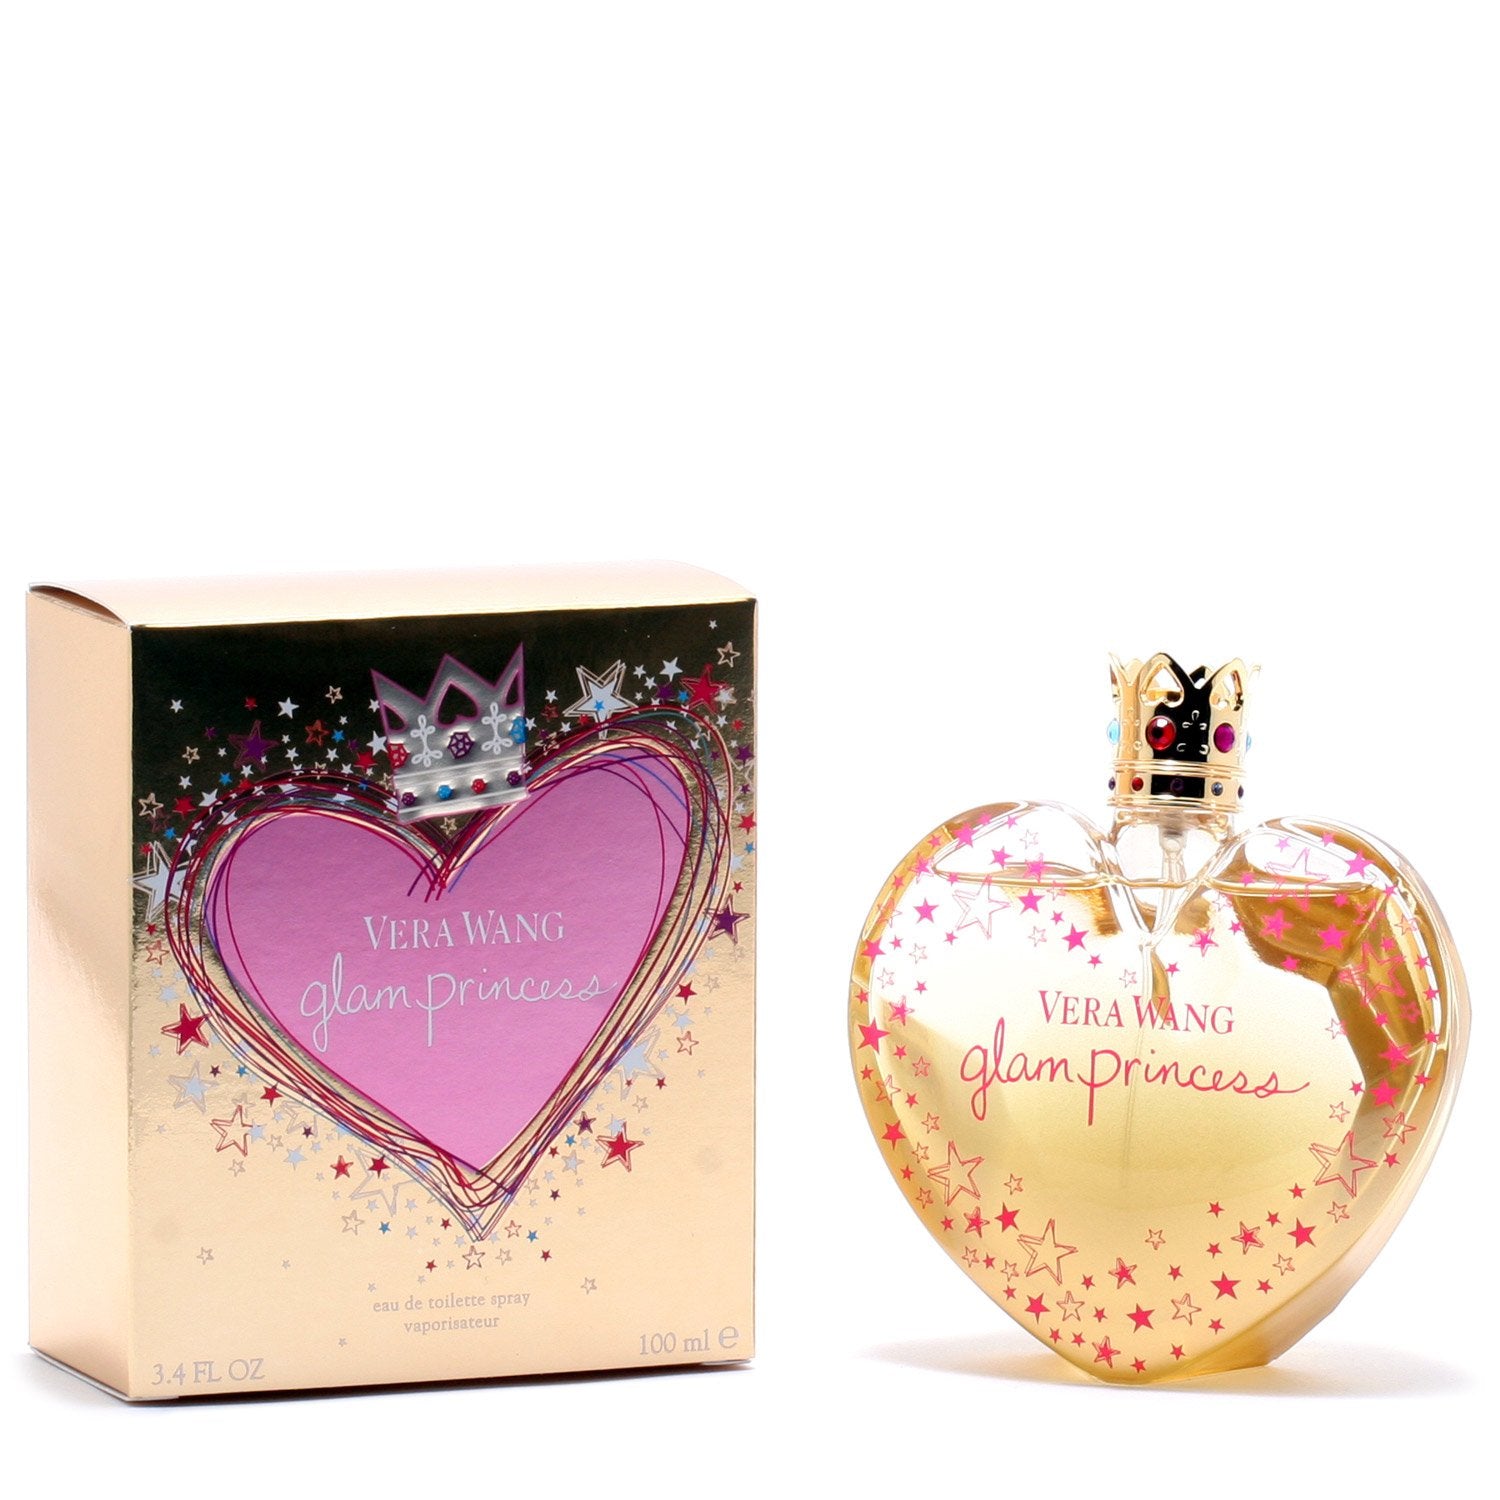 Perfume - VERA WANG GLAM PRINCESS FOR WOMEN - EAU DE TOILETTE SPRAY, 3.4 OZ